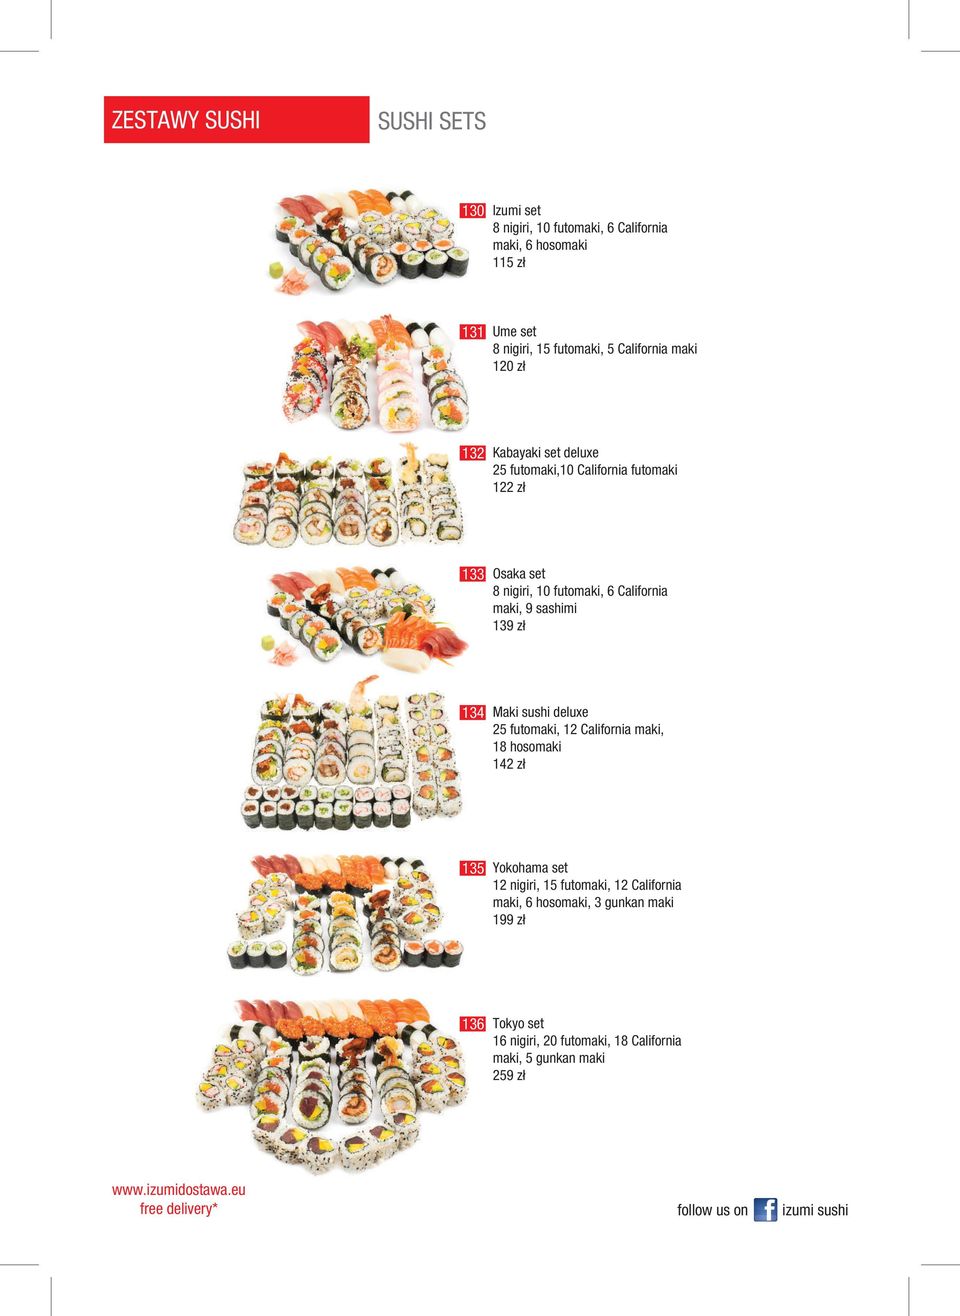 9 sashimi 13 134 Maki sushi deluxe 25 futomaki, 12 California maki, 18 hosomaki 142 zł 135 Yokohama set 12 nigiri, 15 futomaki, 12